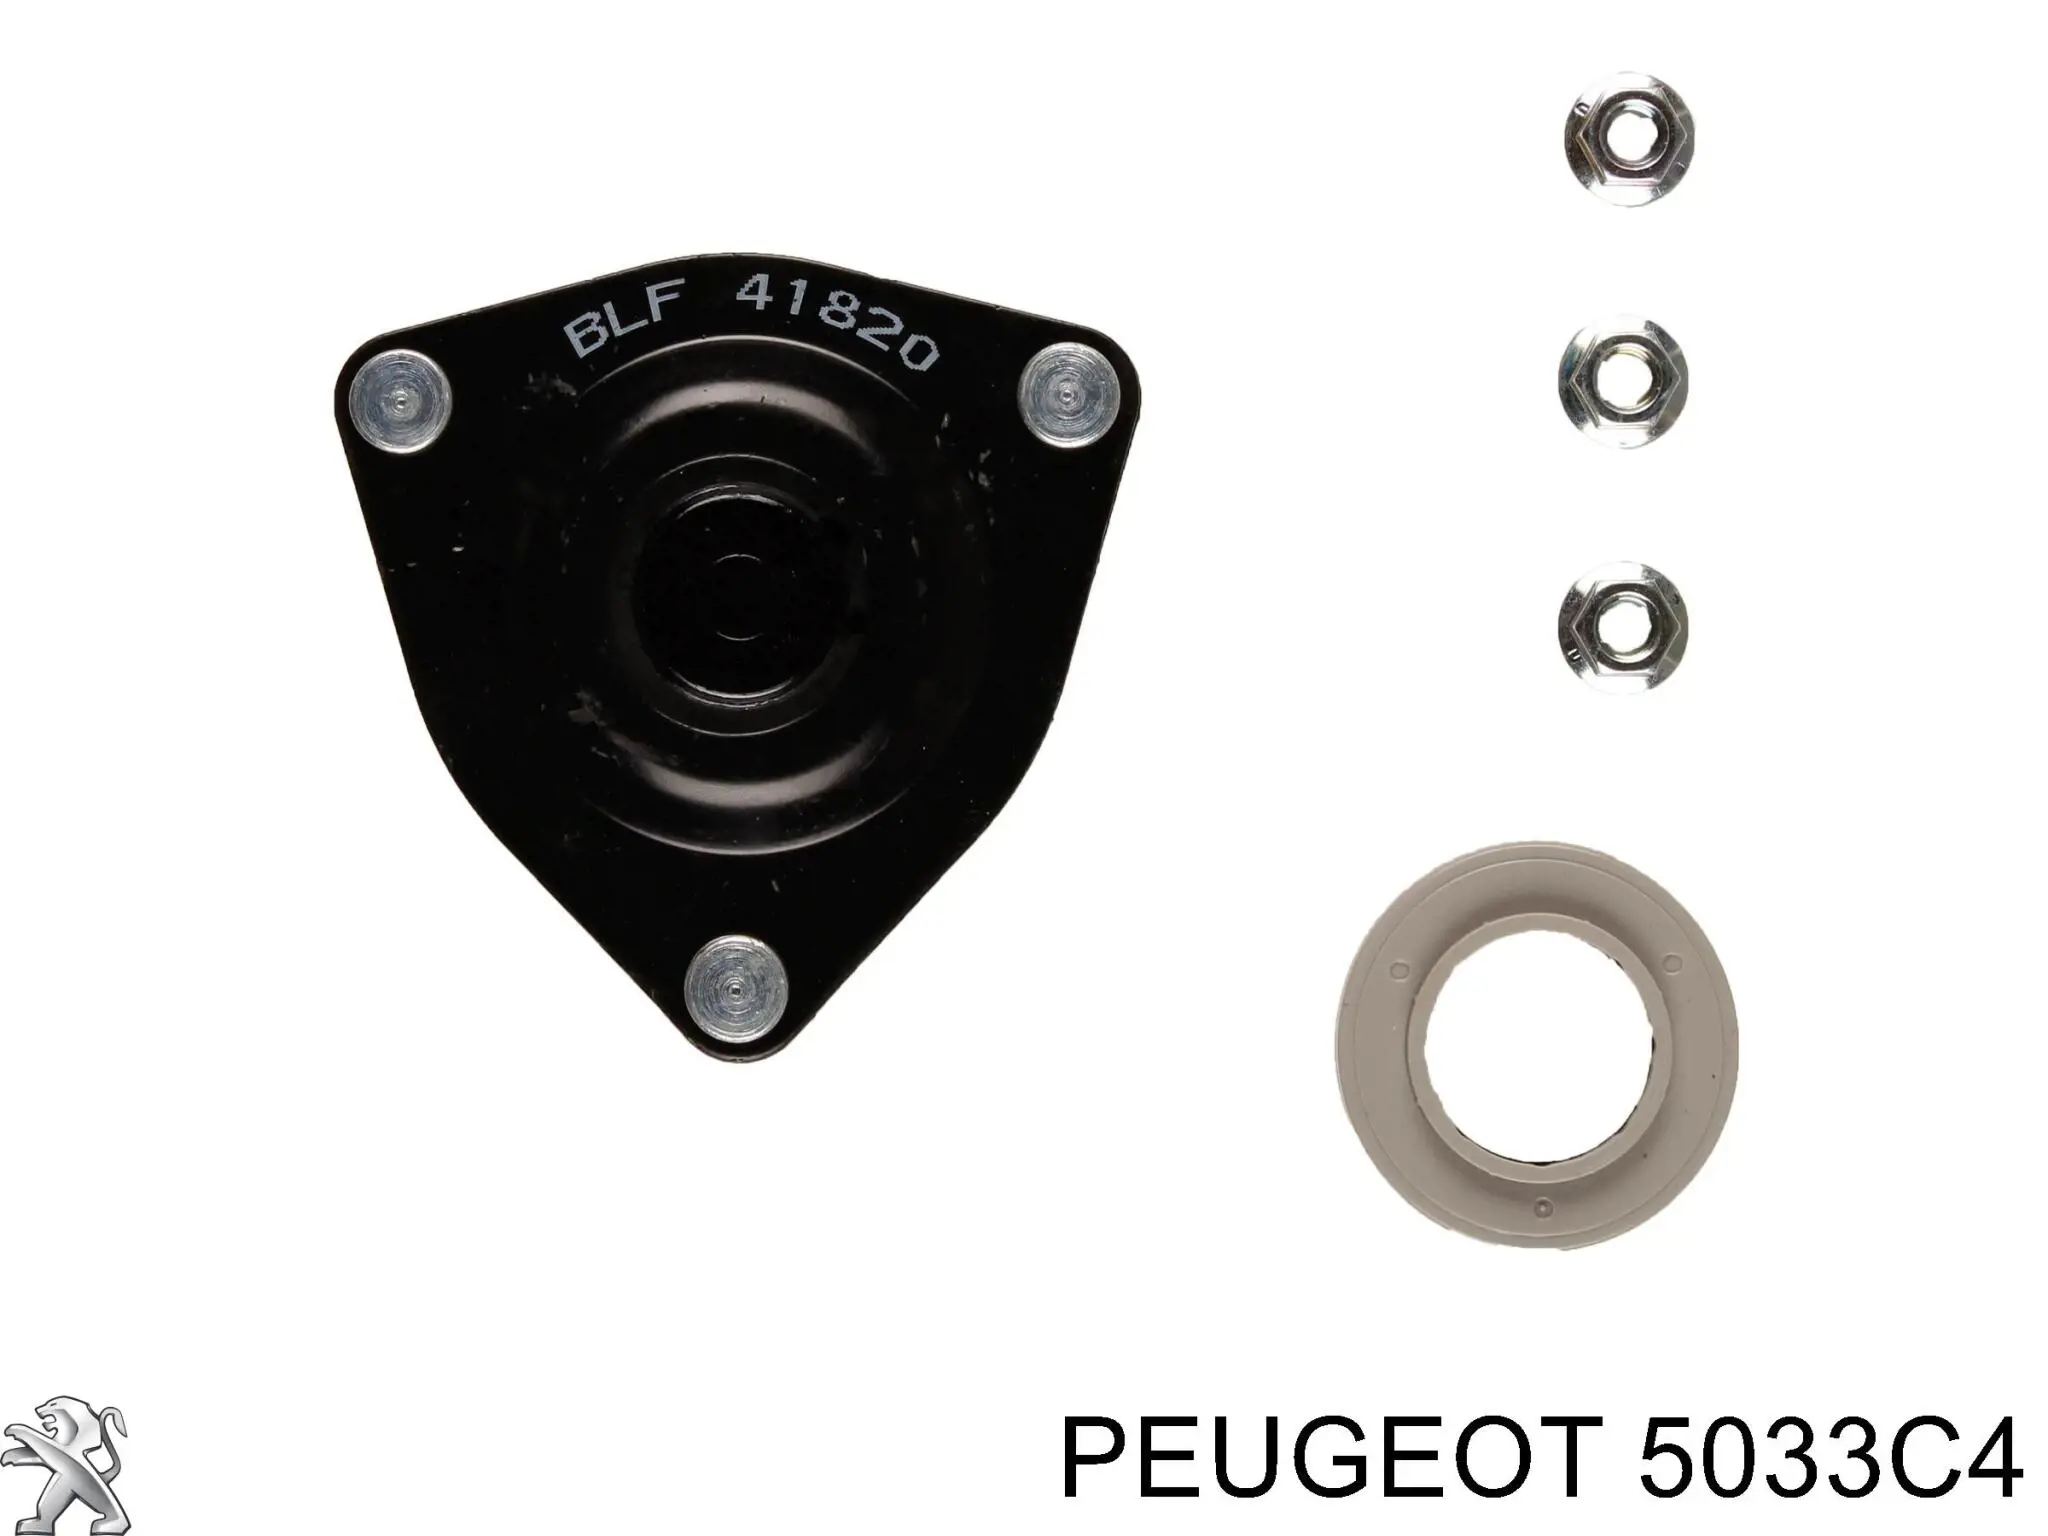 5033C4 Peugeot/Citroen rodamiento amortiguador delantero